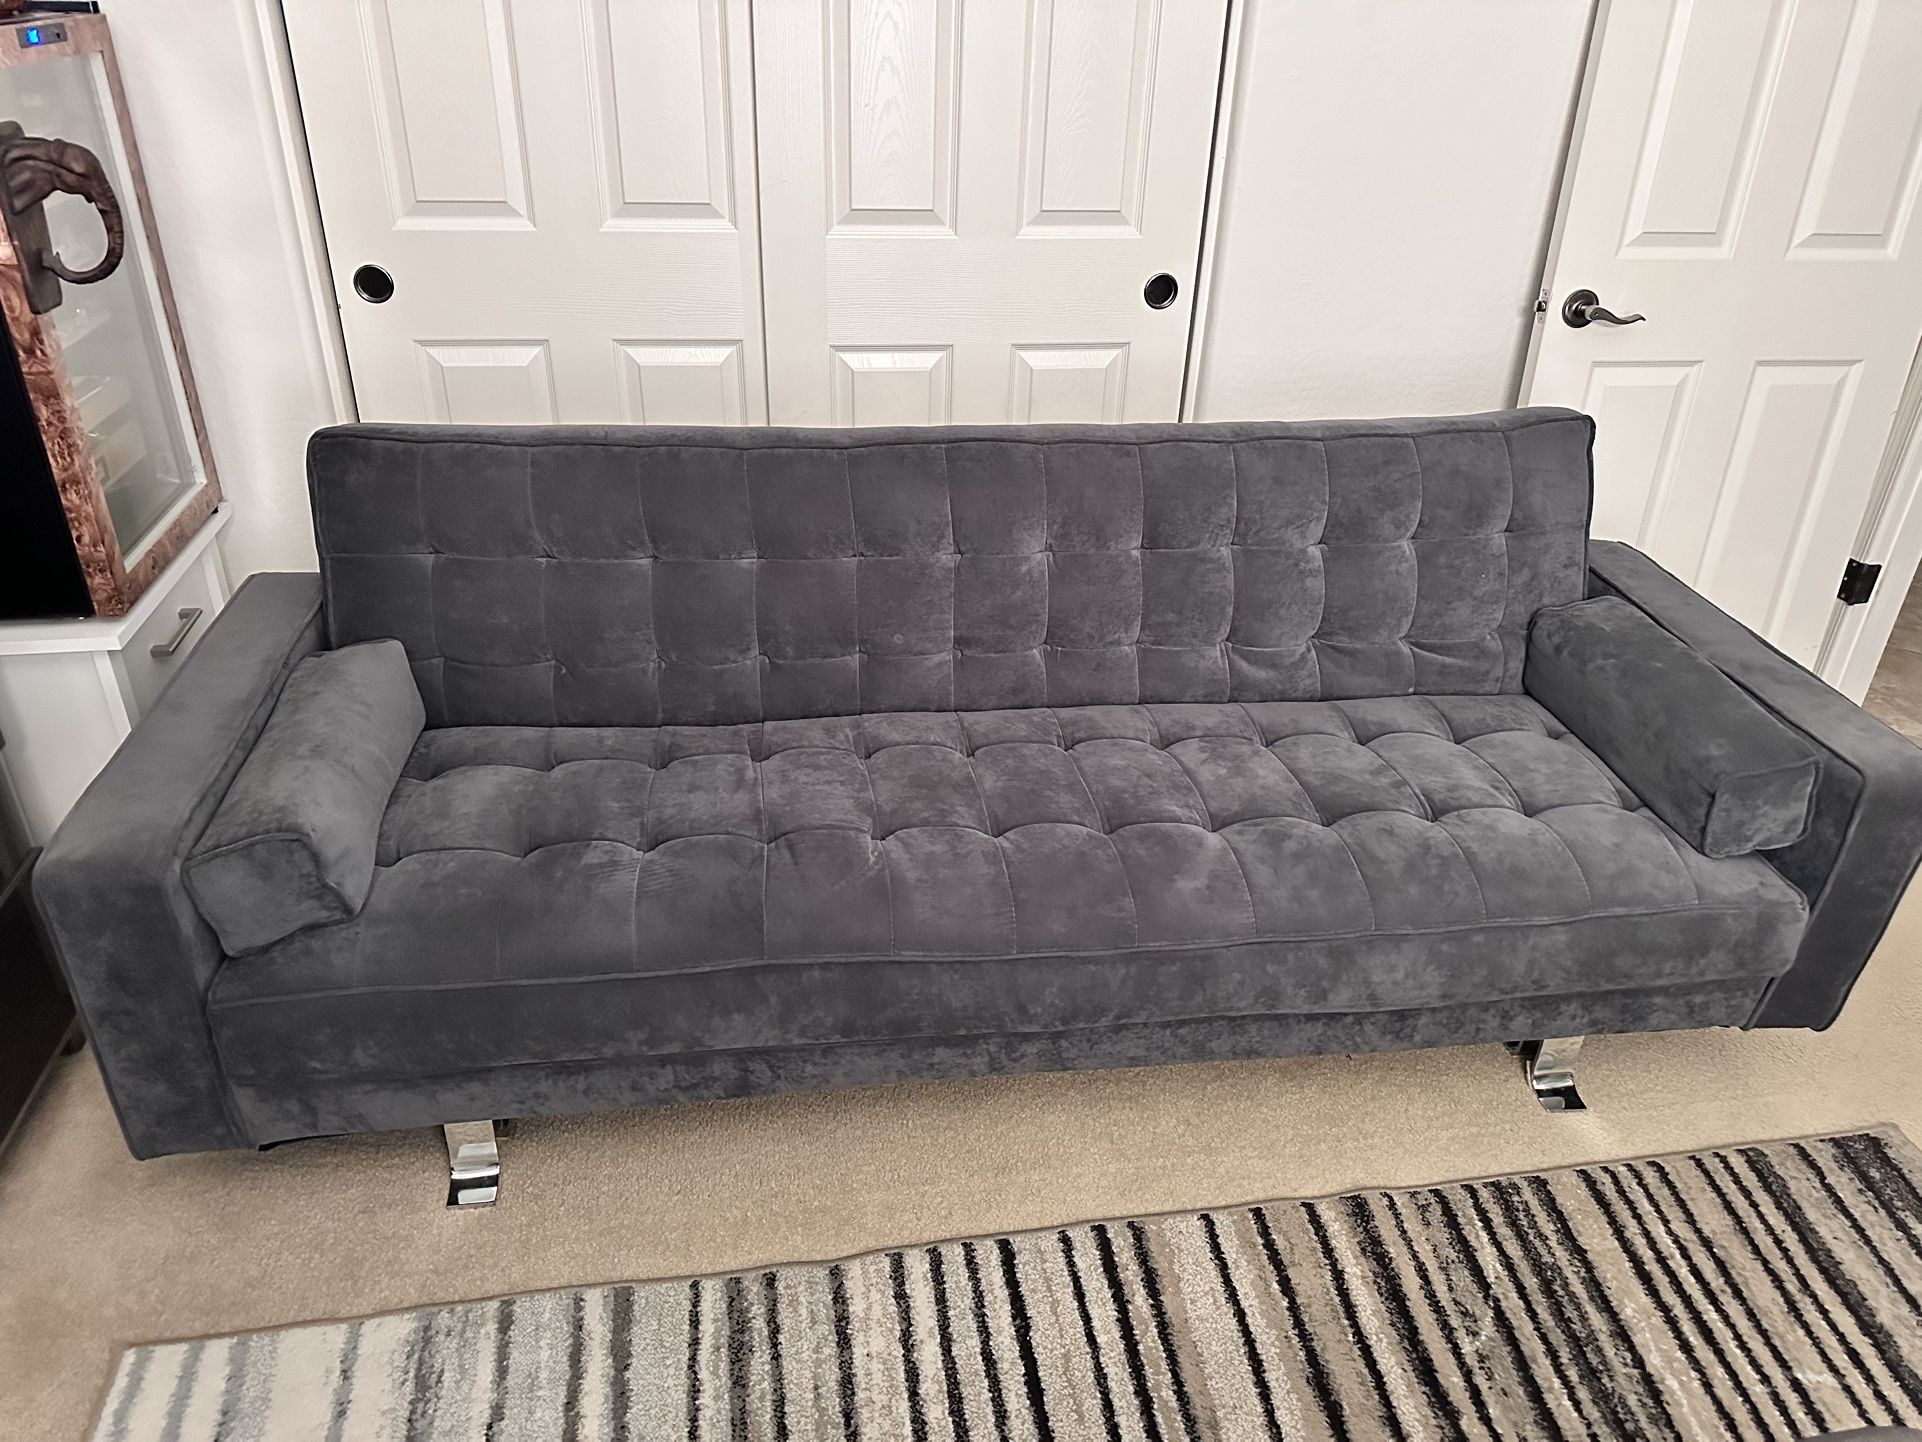 Sofa For Sale $200